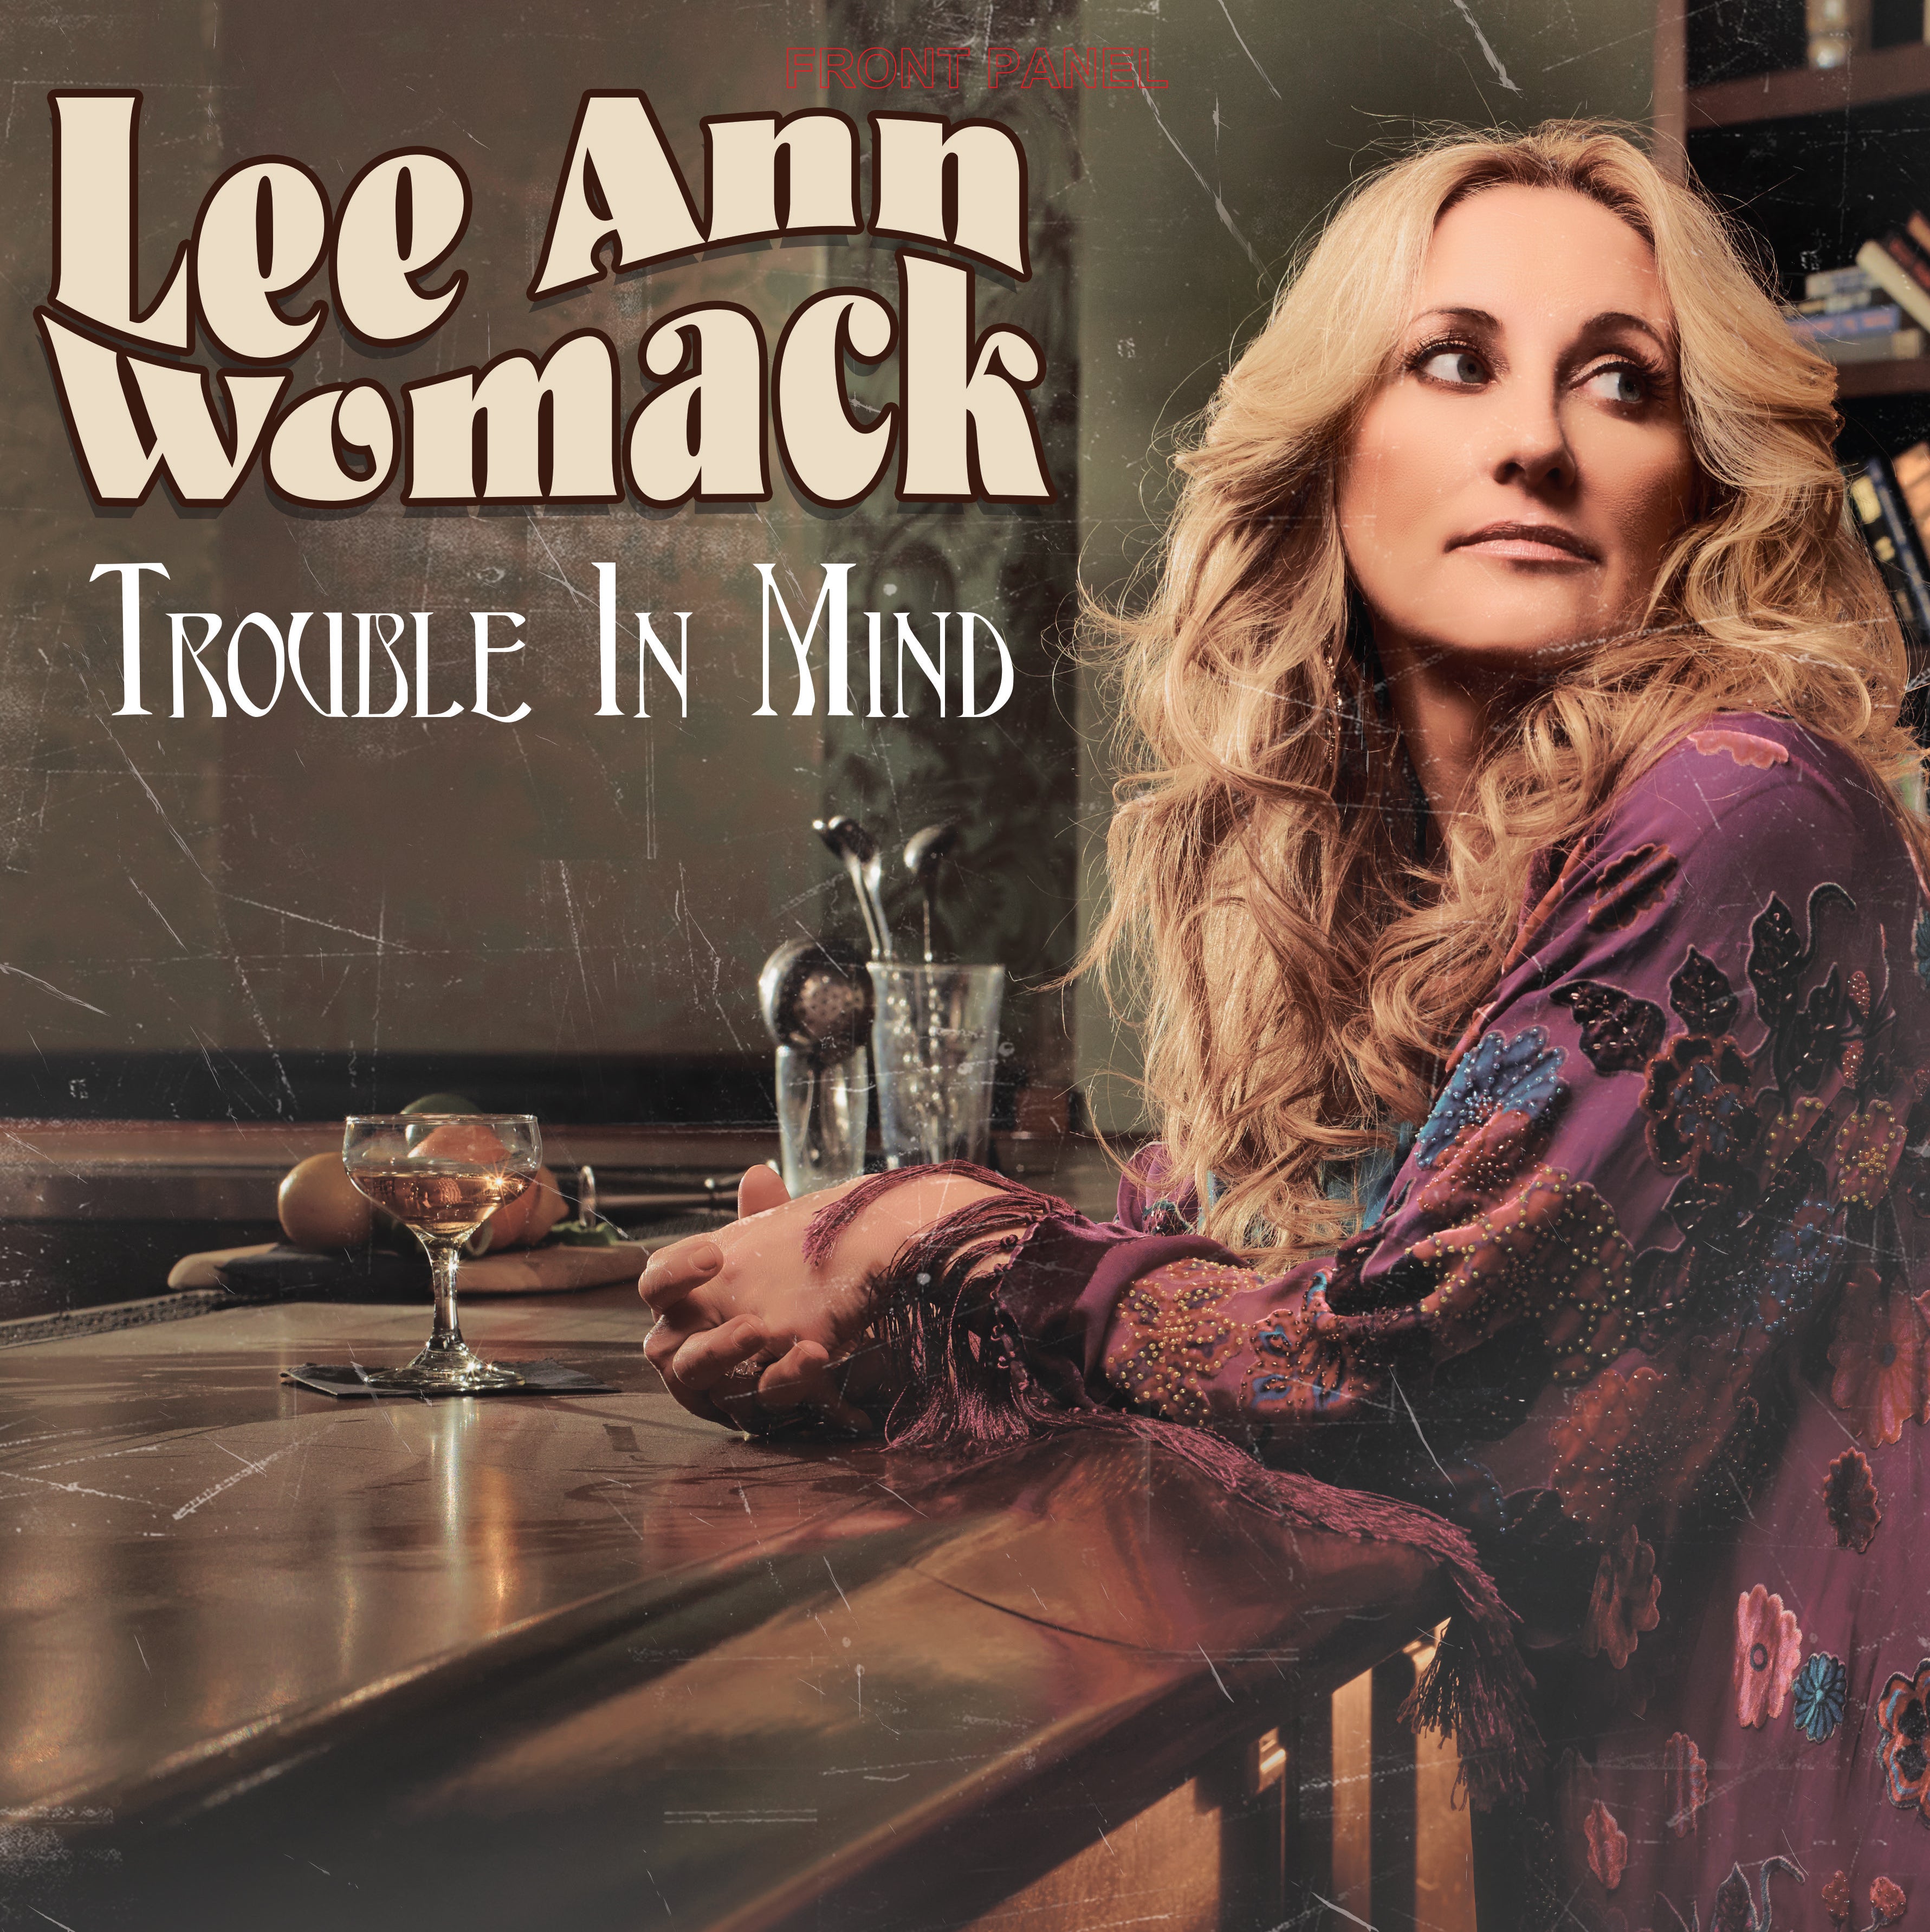 Lee Ann Womack - Trouble in Mind [12" Single]